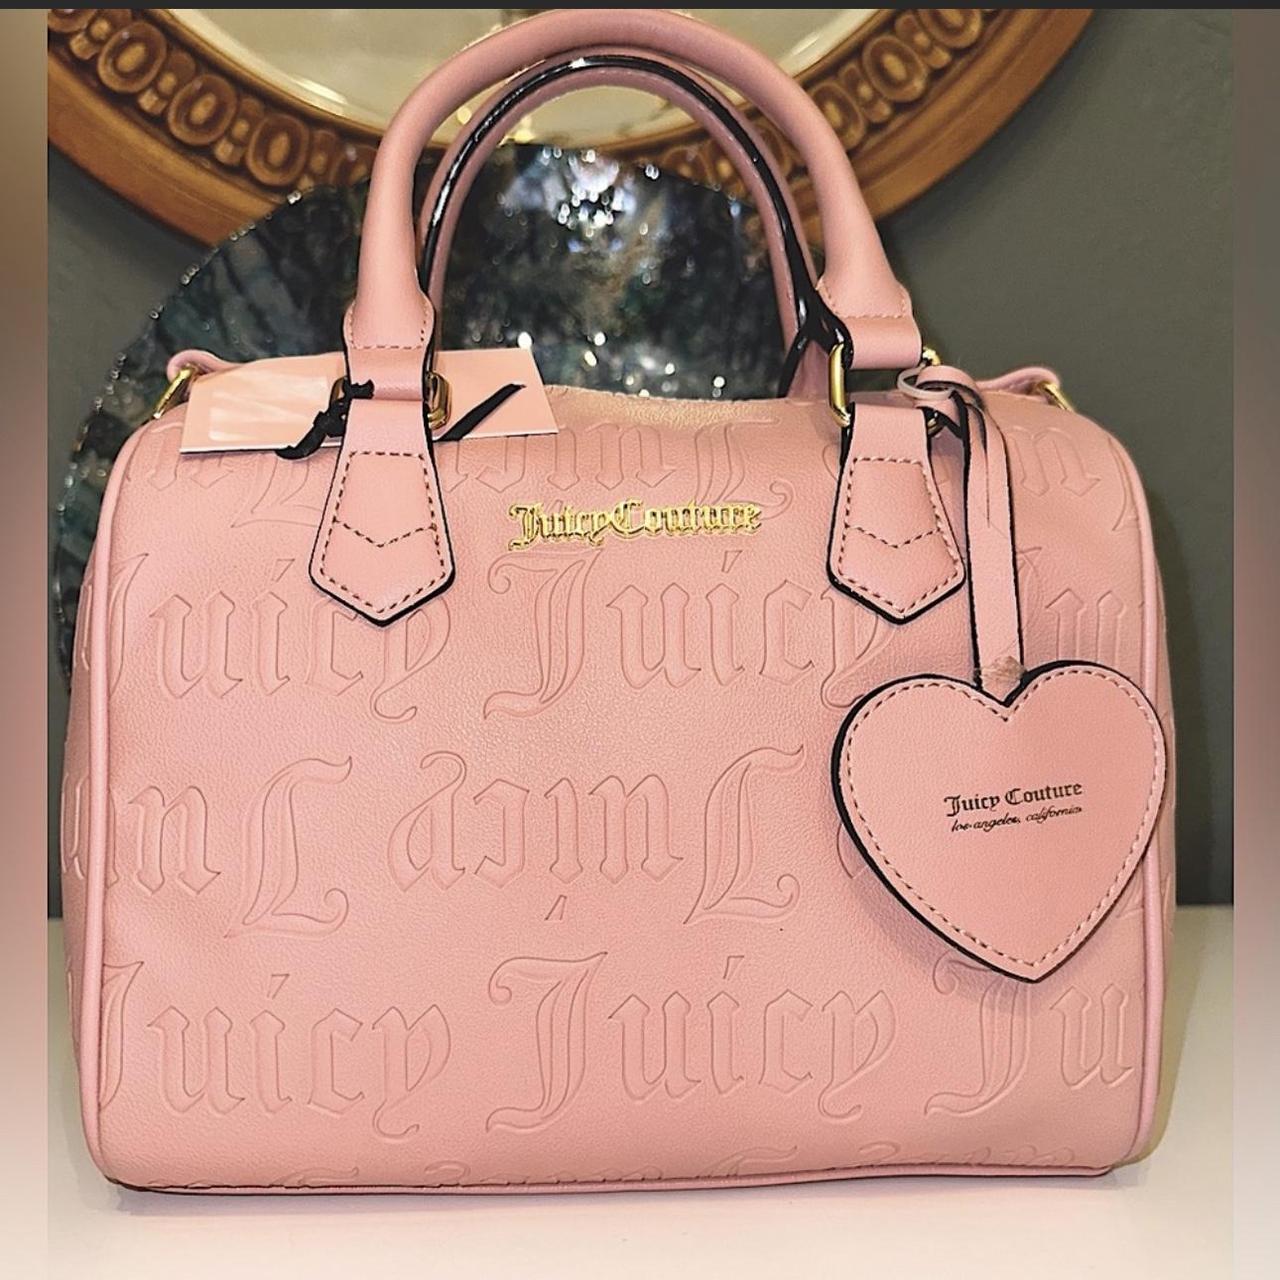 Juicy Couture  macroon dot logo Satchel handbag  with heart tag